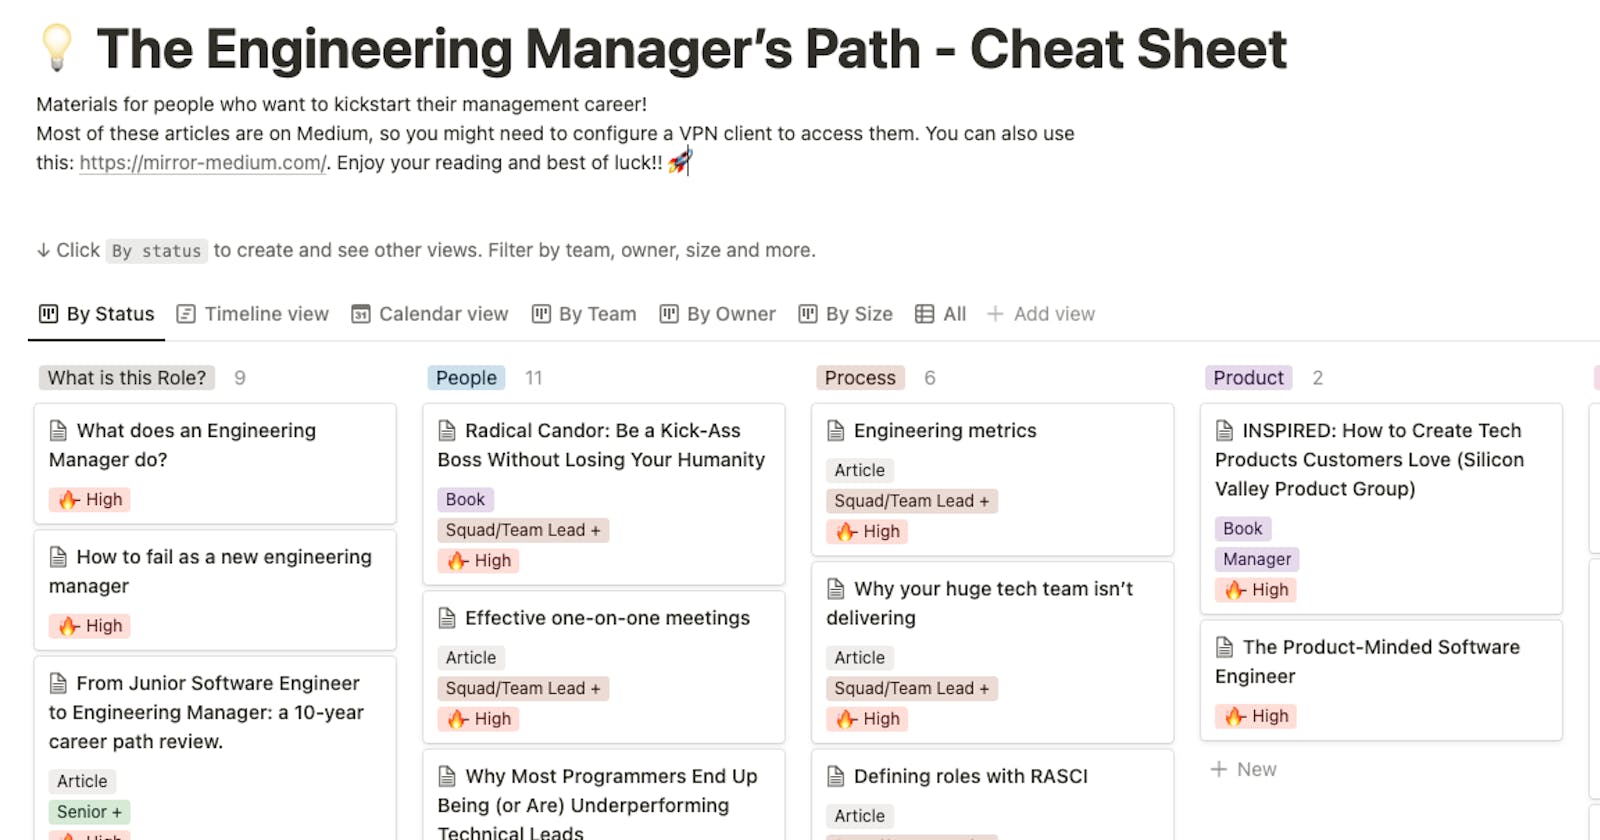 Engineering Management Path - Cheat Sheet - v1.0